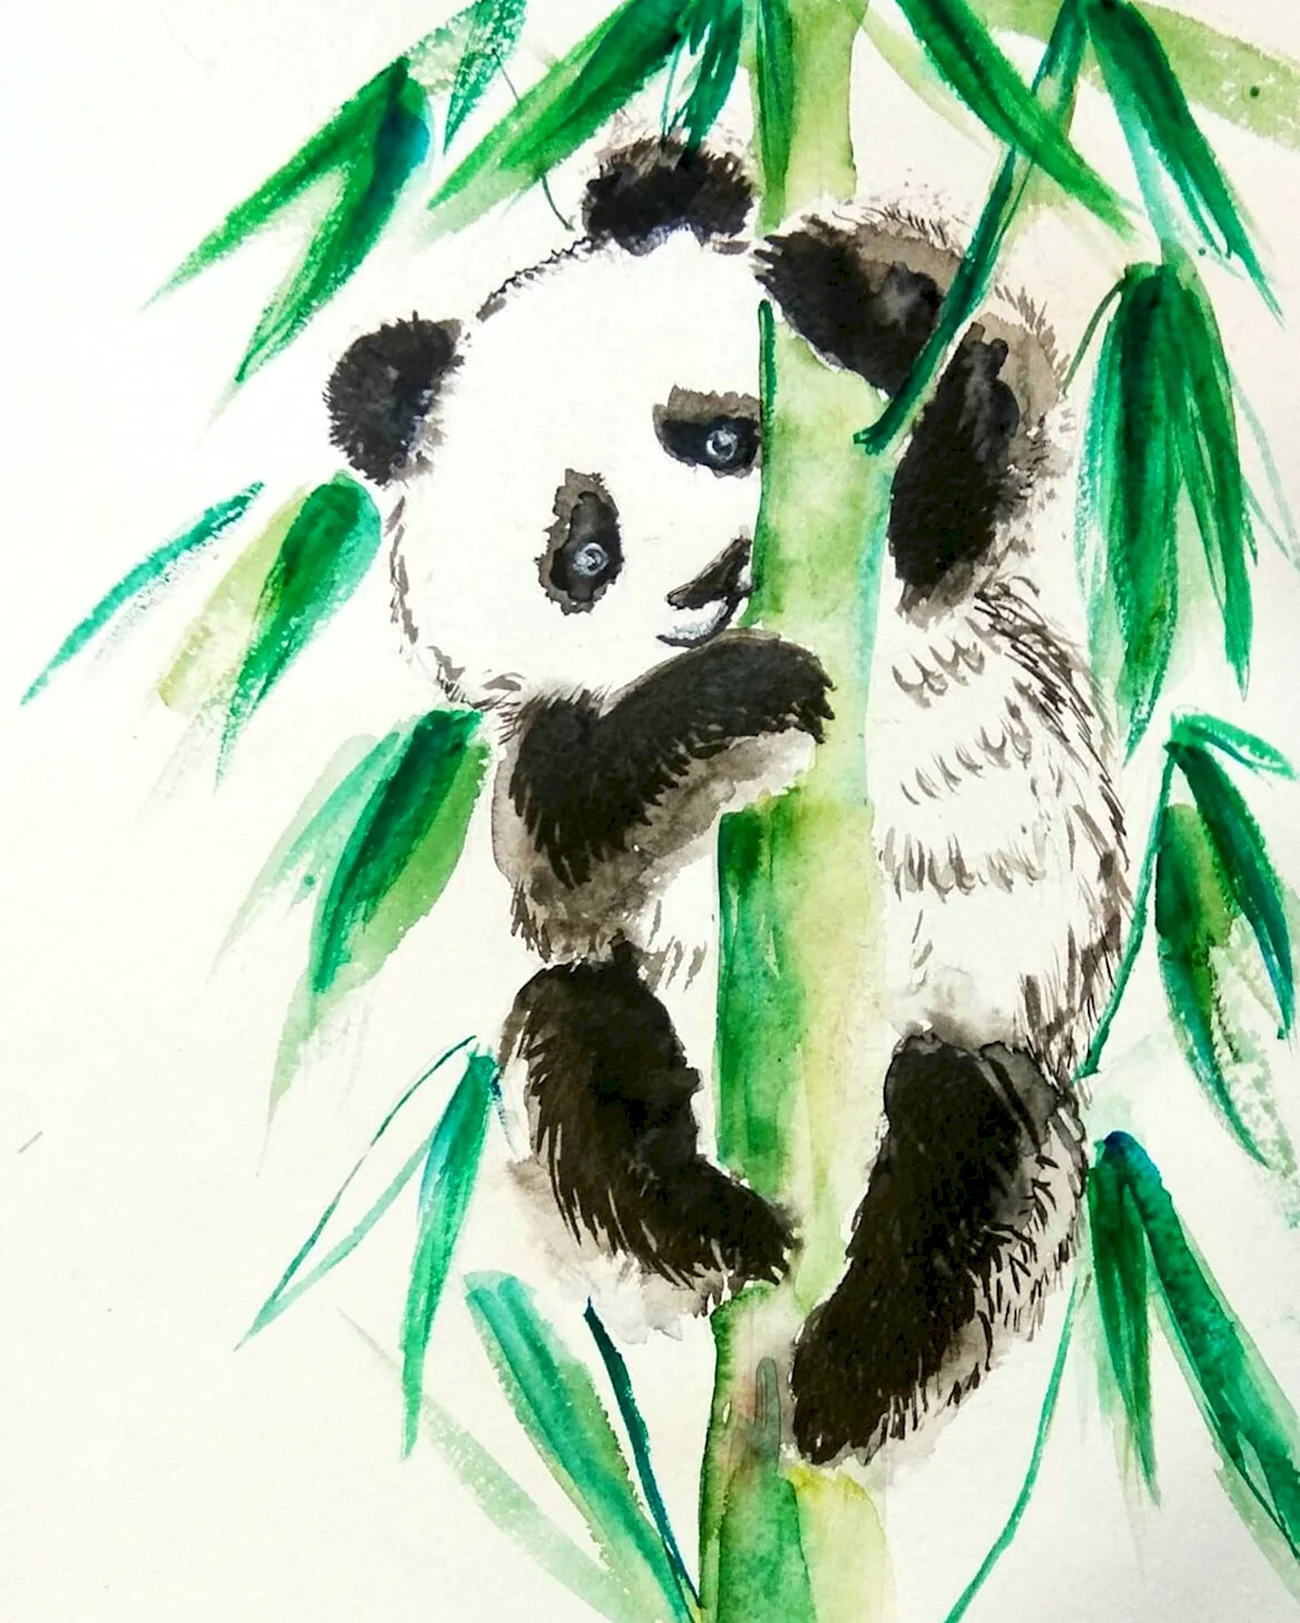 Панда карандашом